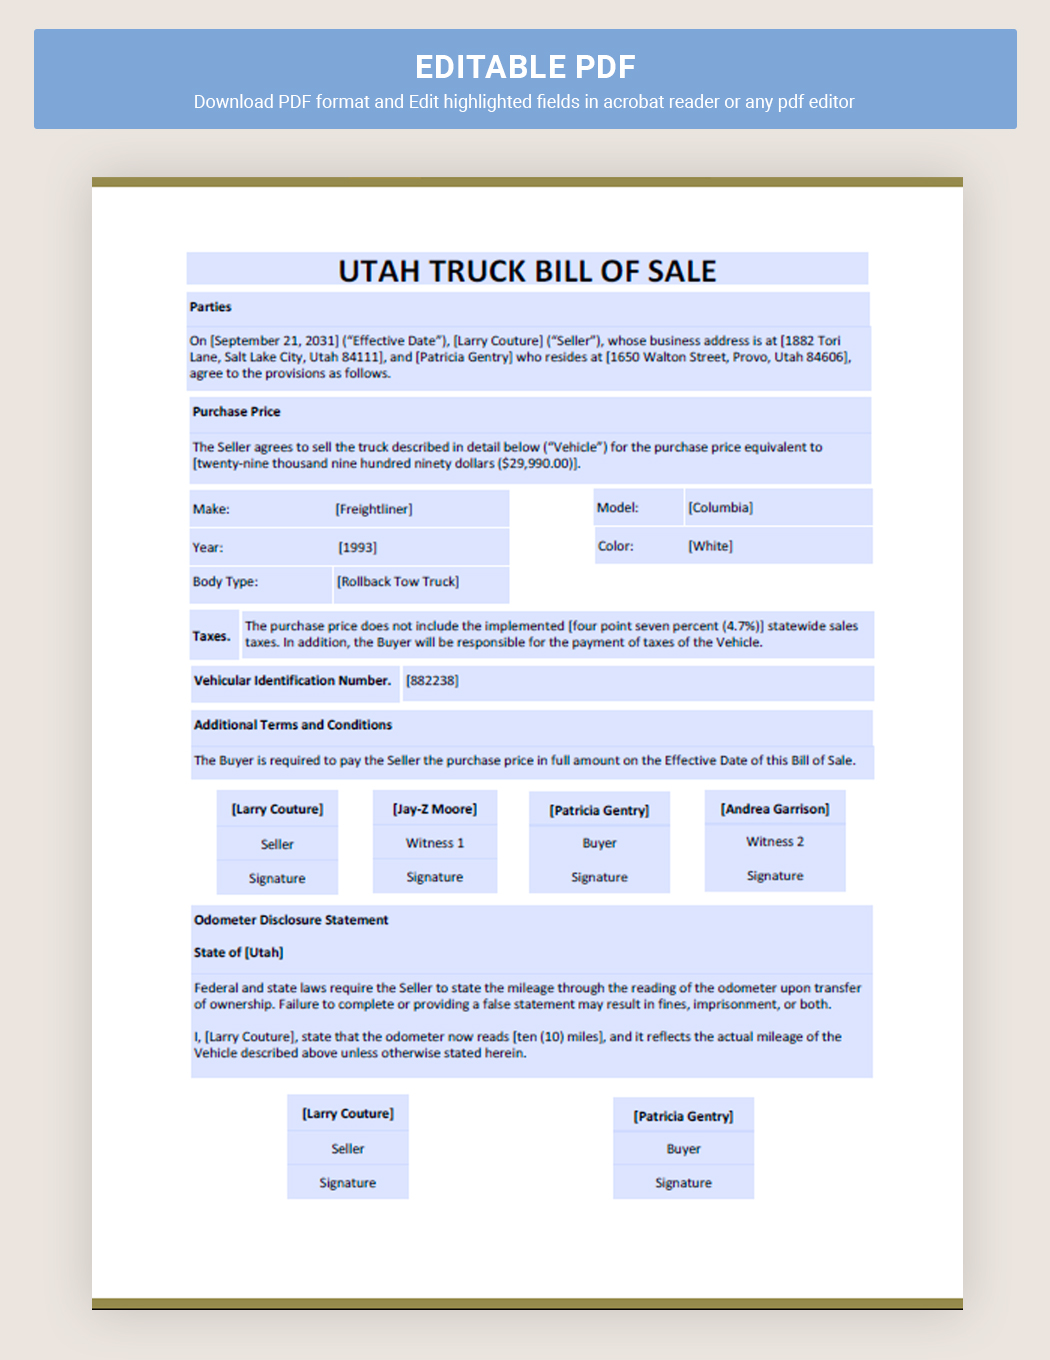 Utah Truck bill of sale Form template